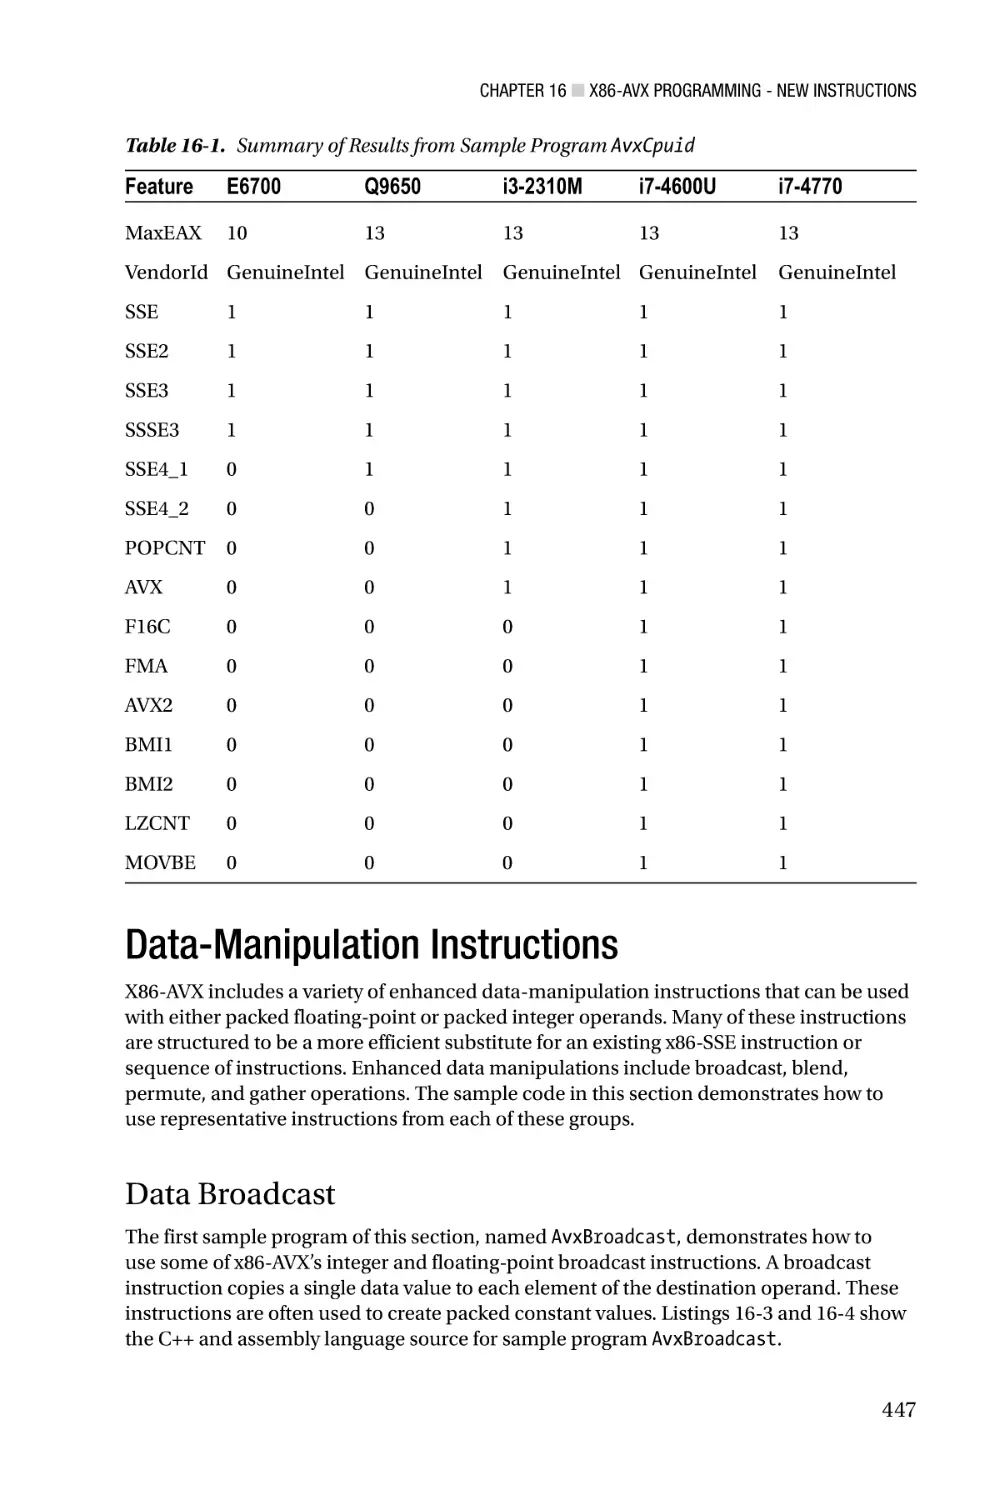 Data-Manipulation Instructions
Data Broadcast